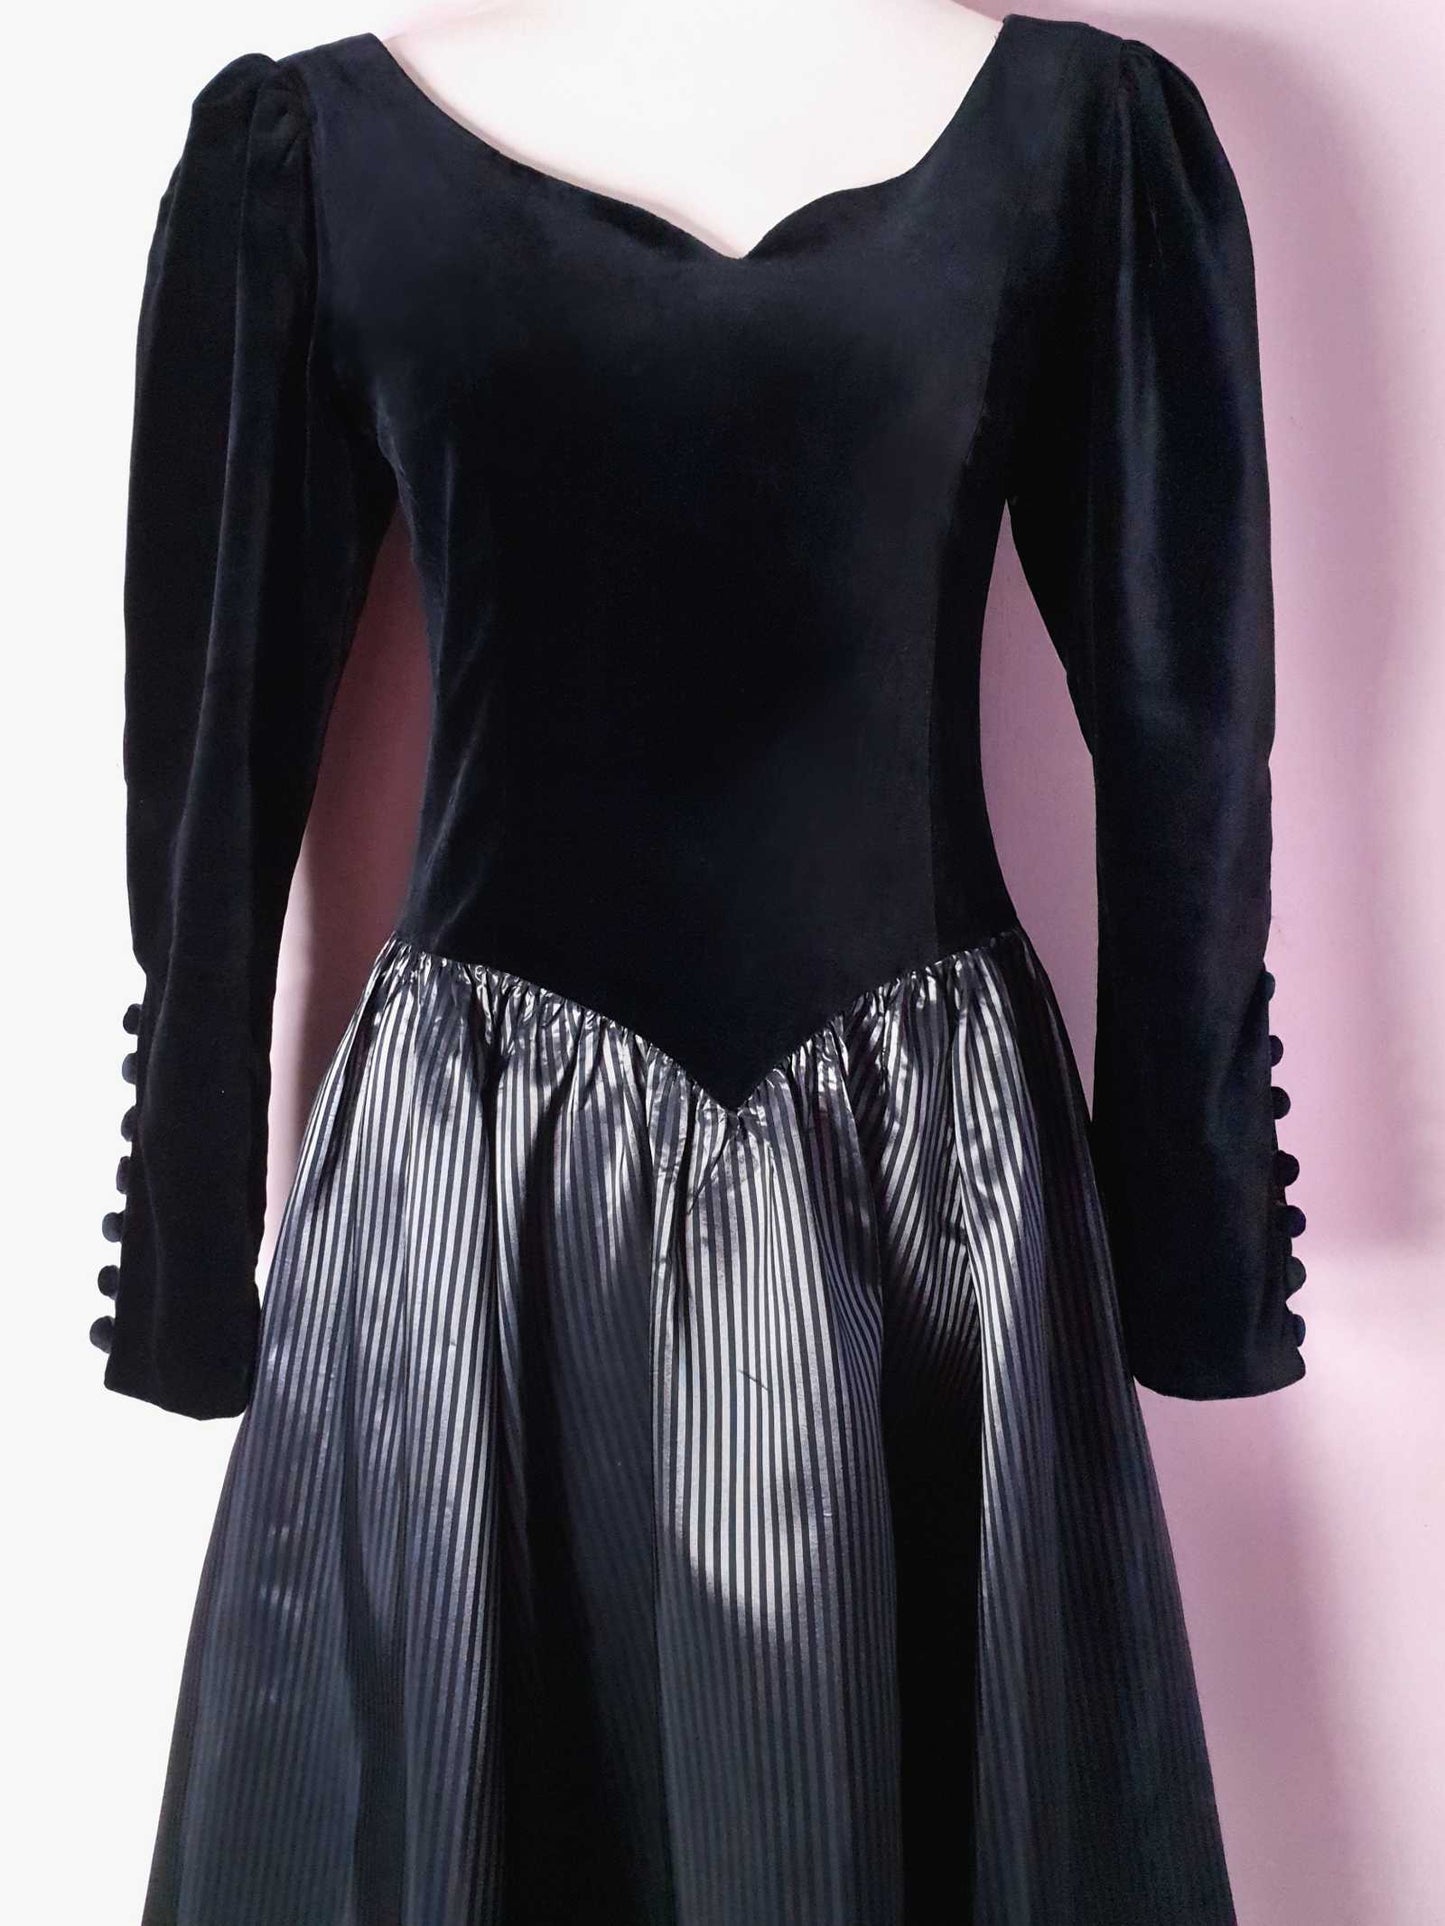 Fabulous Vintage 1980s Laura Ashley Black Velvet and Taffeta Dress - Size 8/10